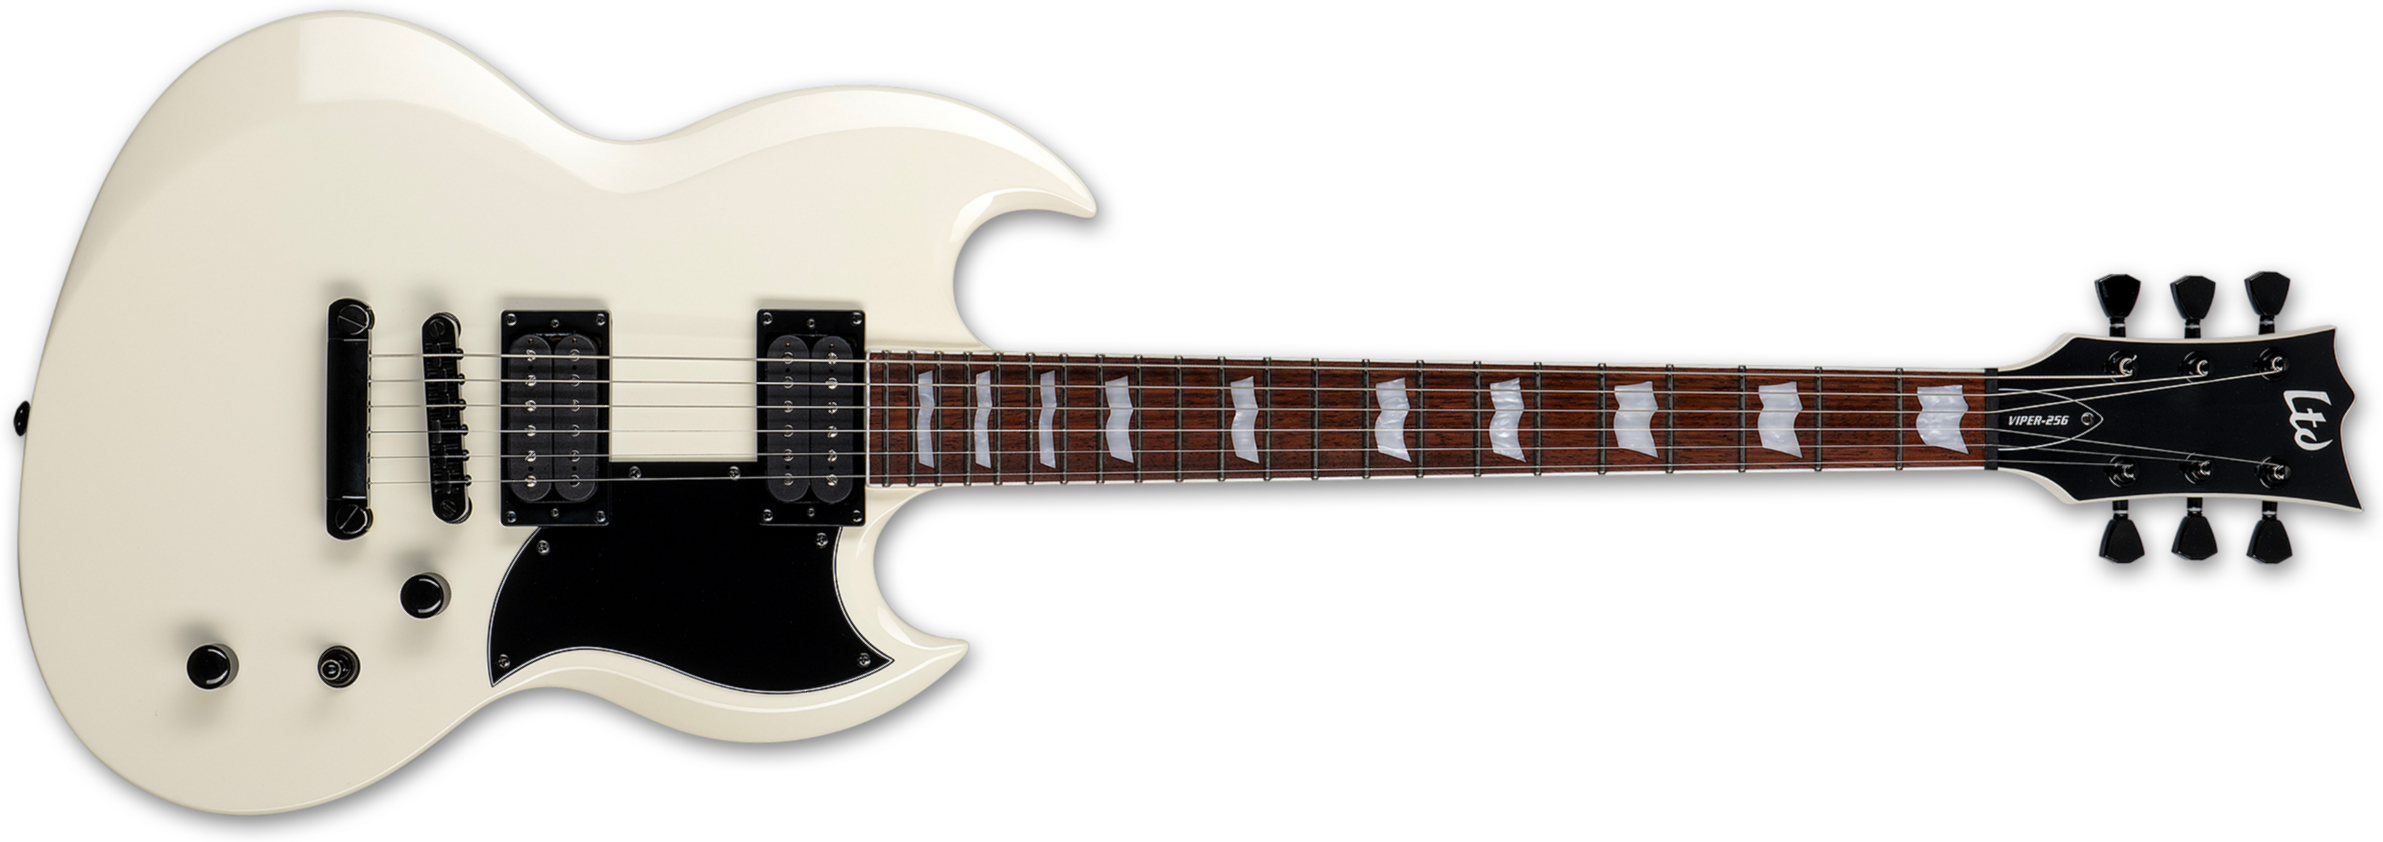 Ltd Viper-256 Hh Jat - Olympic White - Metal electric guitar - Main picture